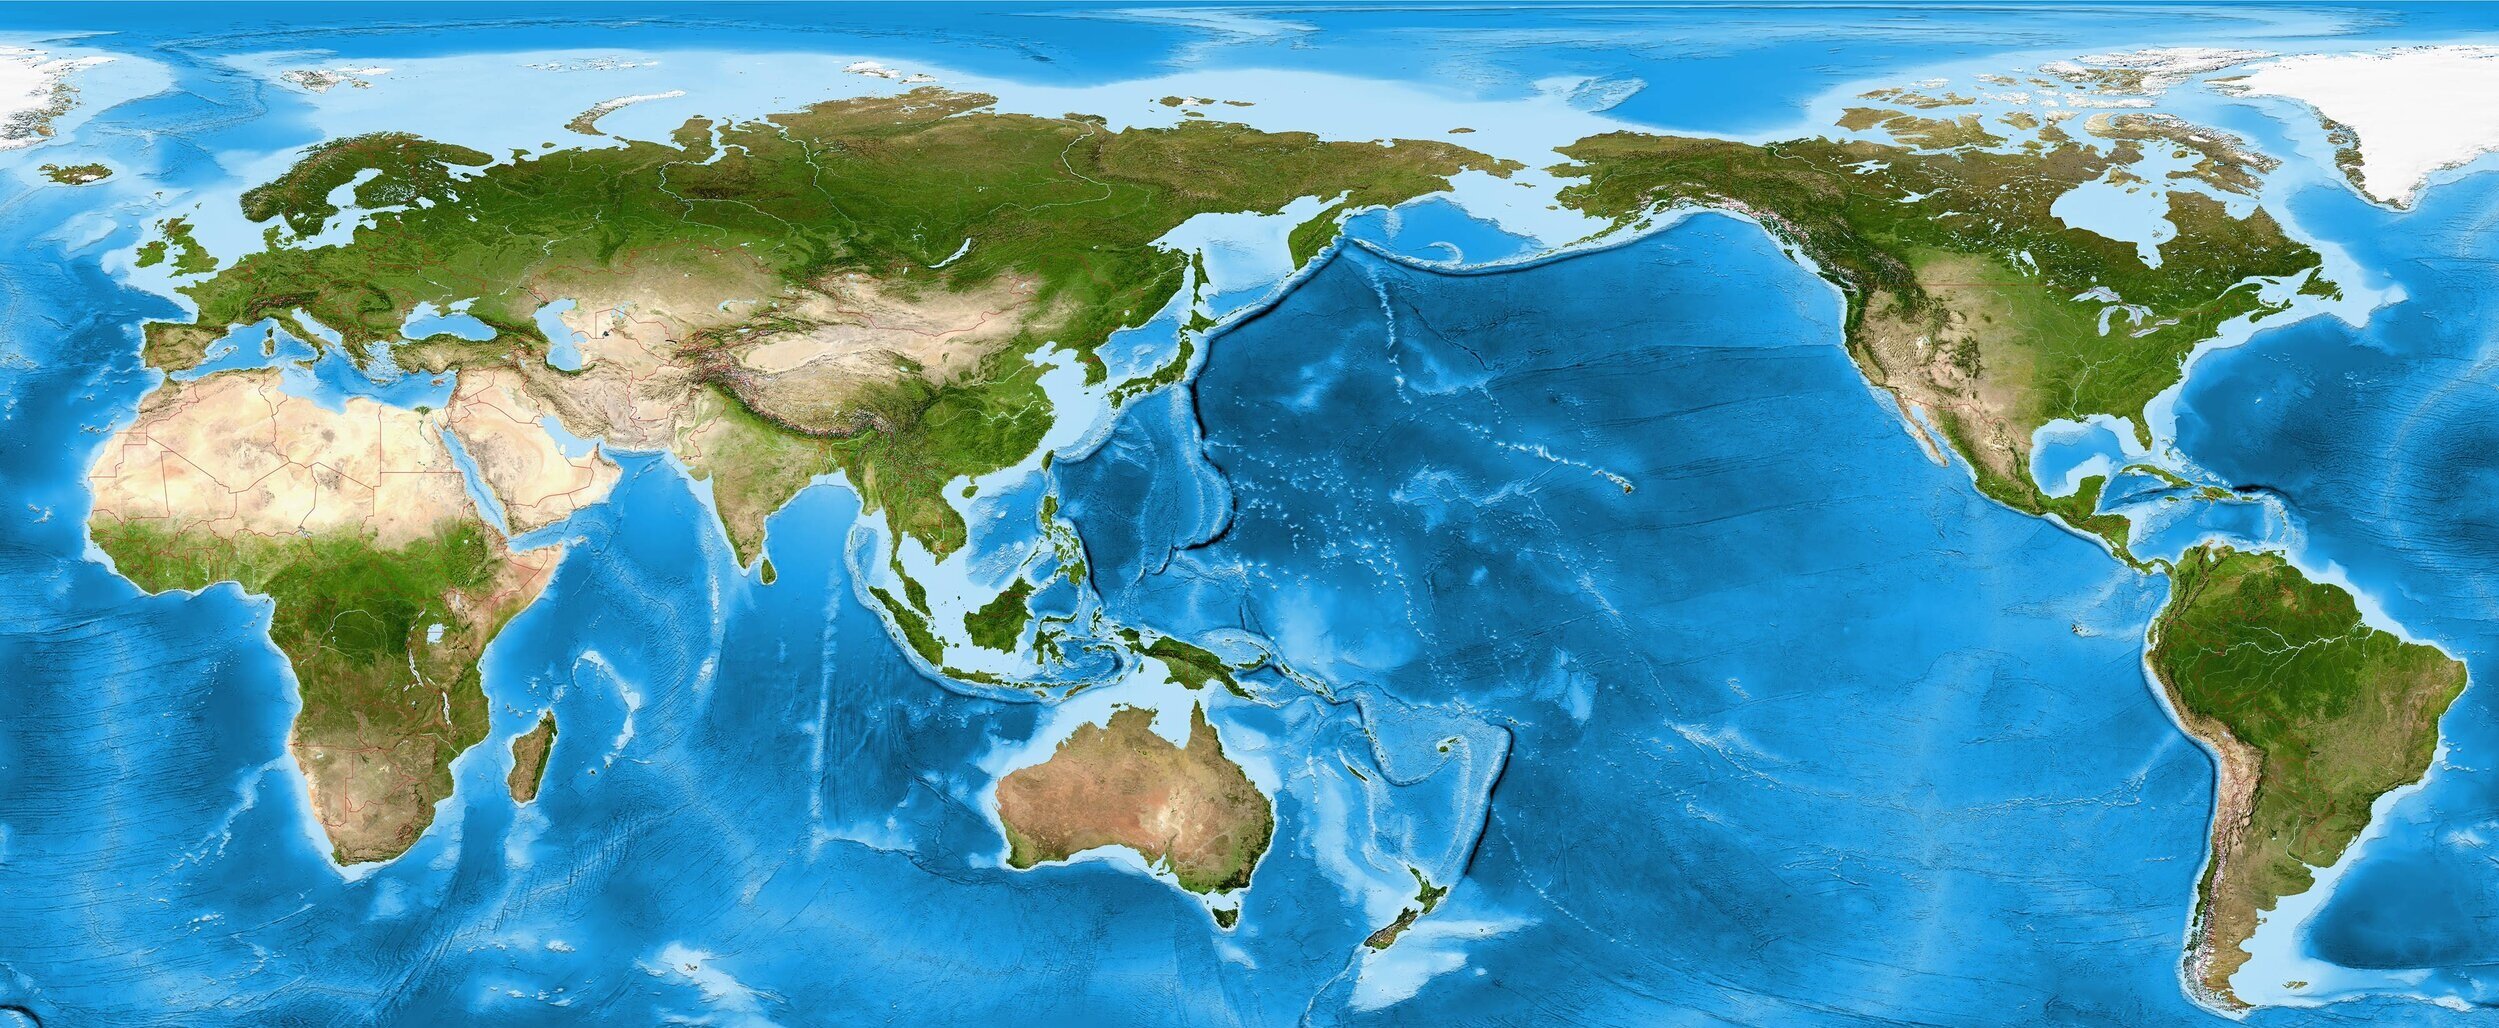 World s oceans. Текстура планеты. Тихий океан на планете. Моря земли. Текстура планеты земля для 3d Max.